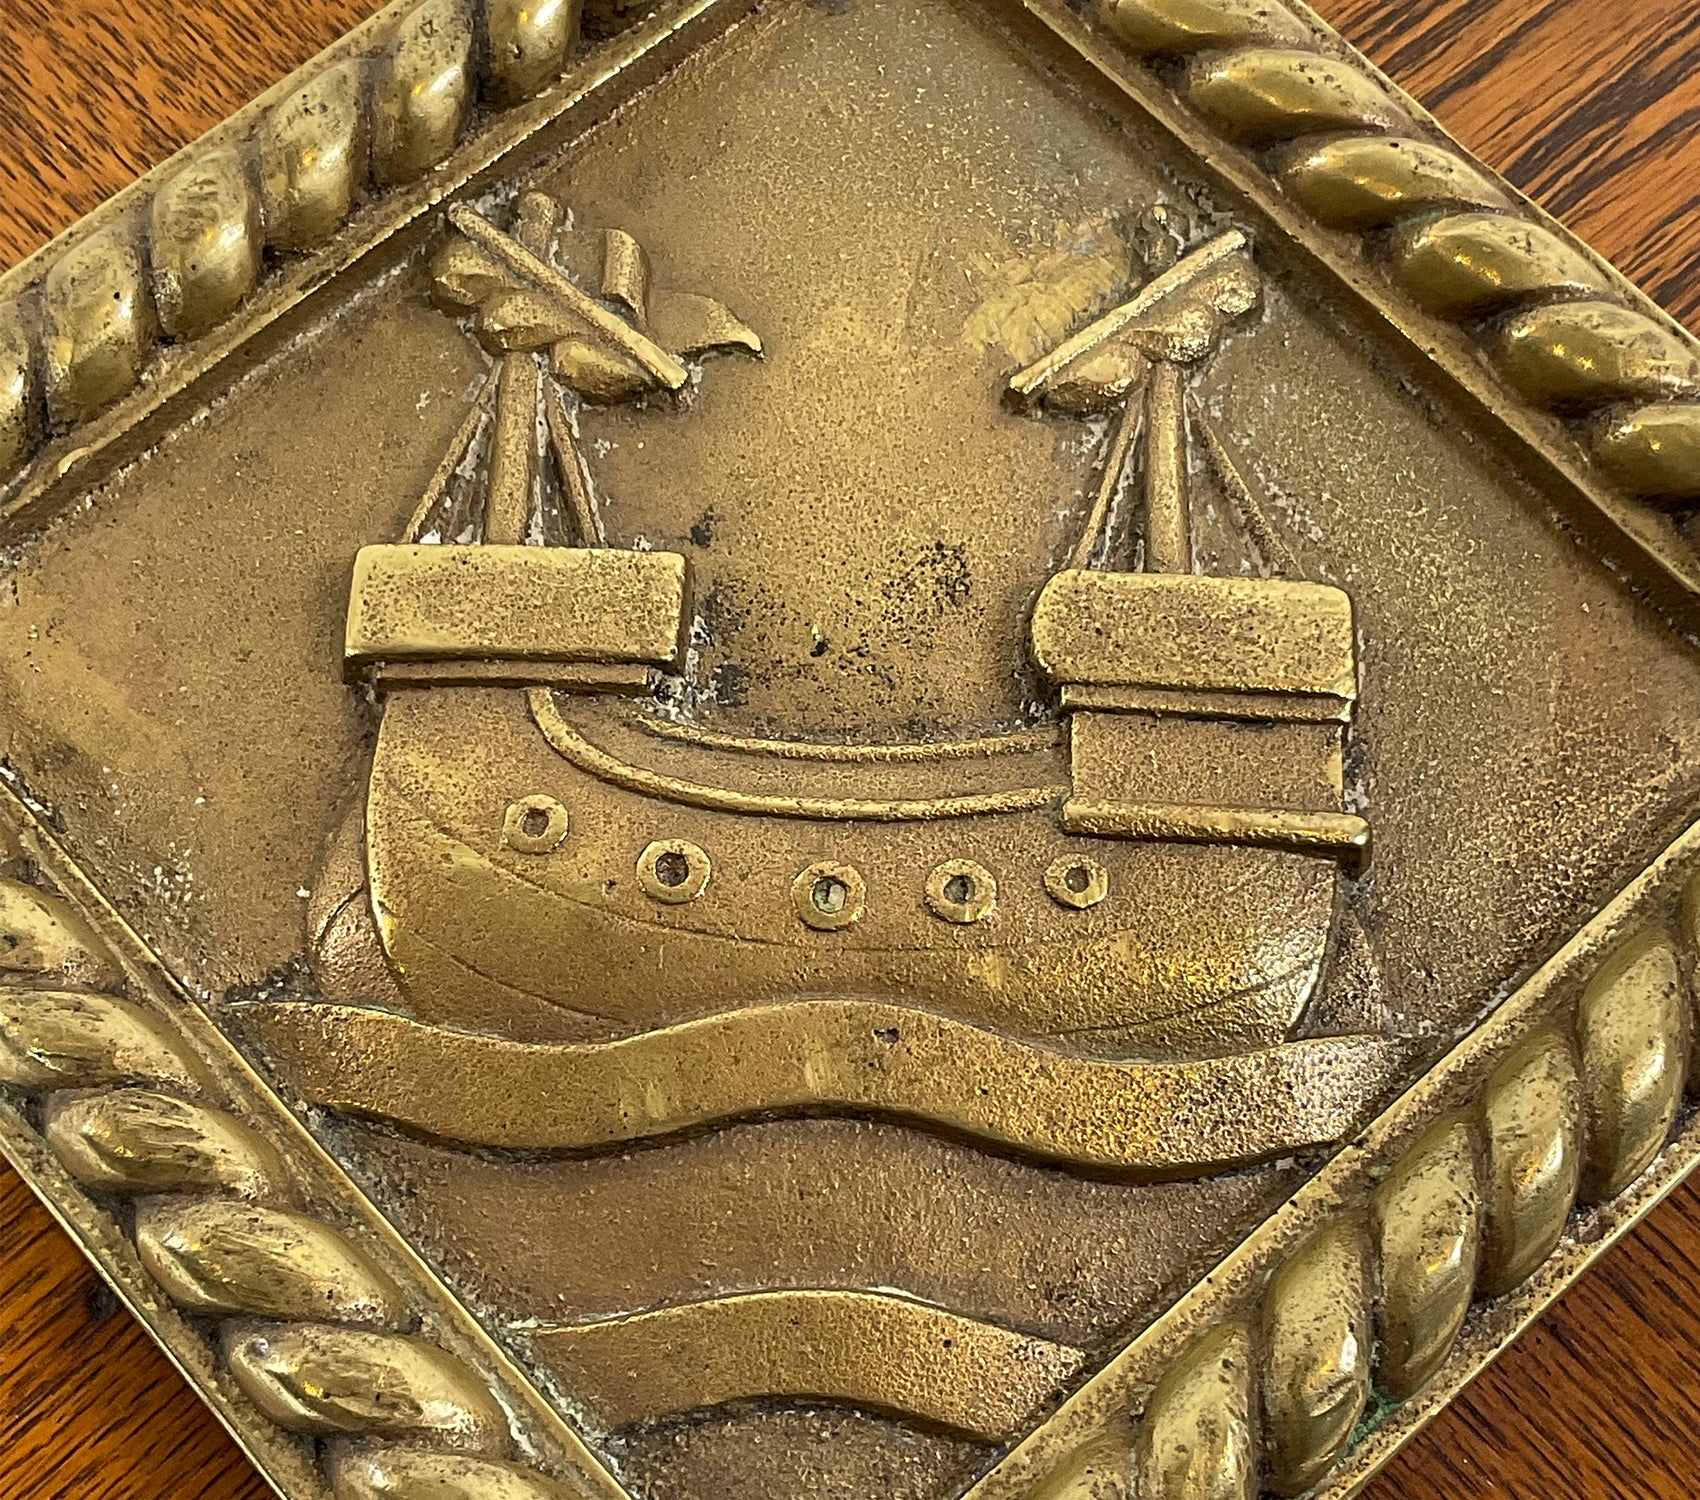 HMS Scarborough Brass Navy Plaque – Lannan Gallery